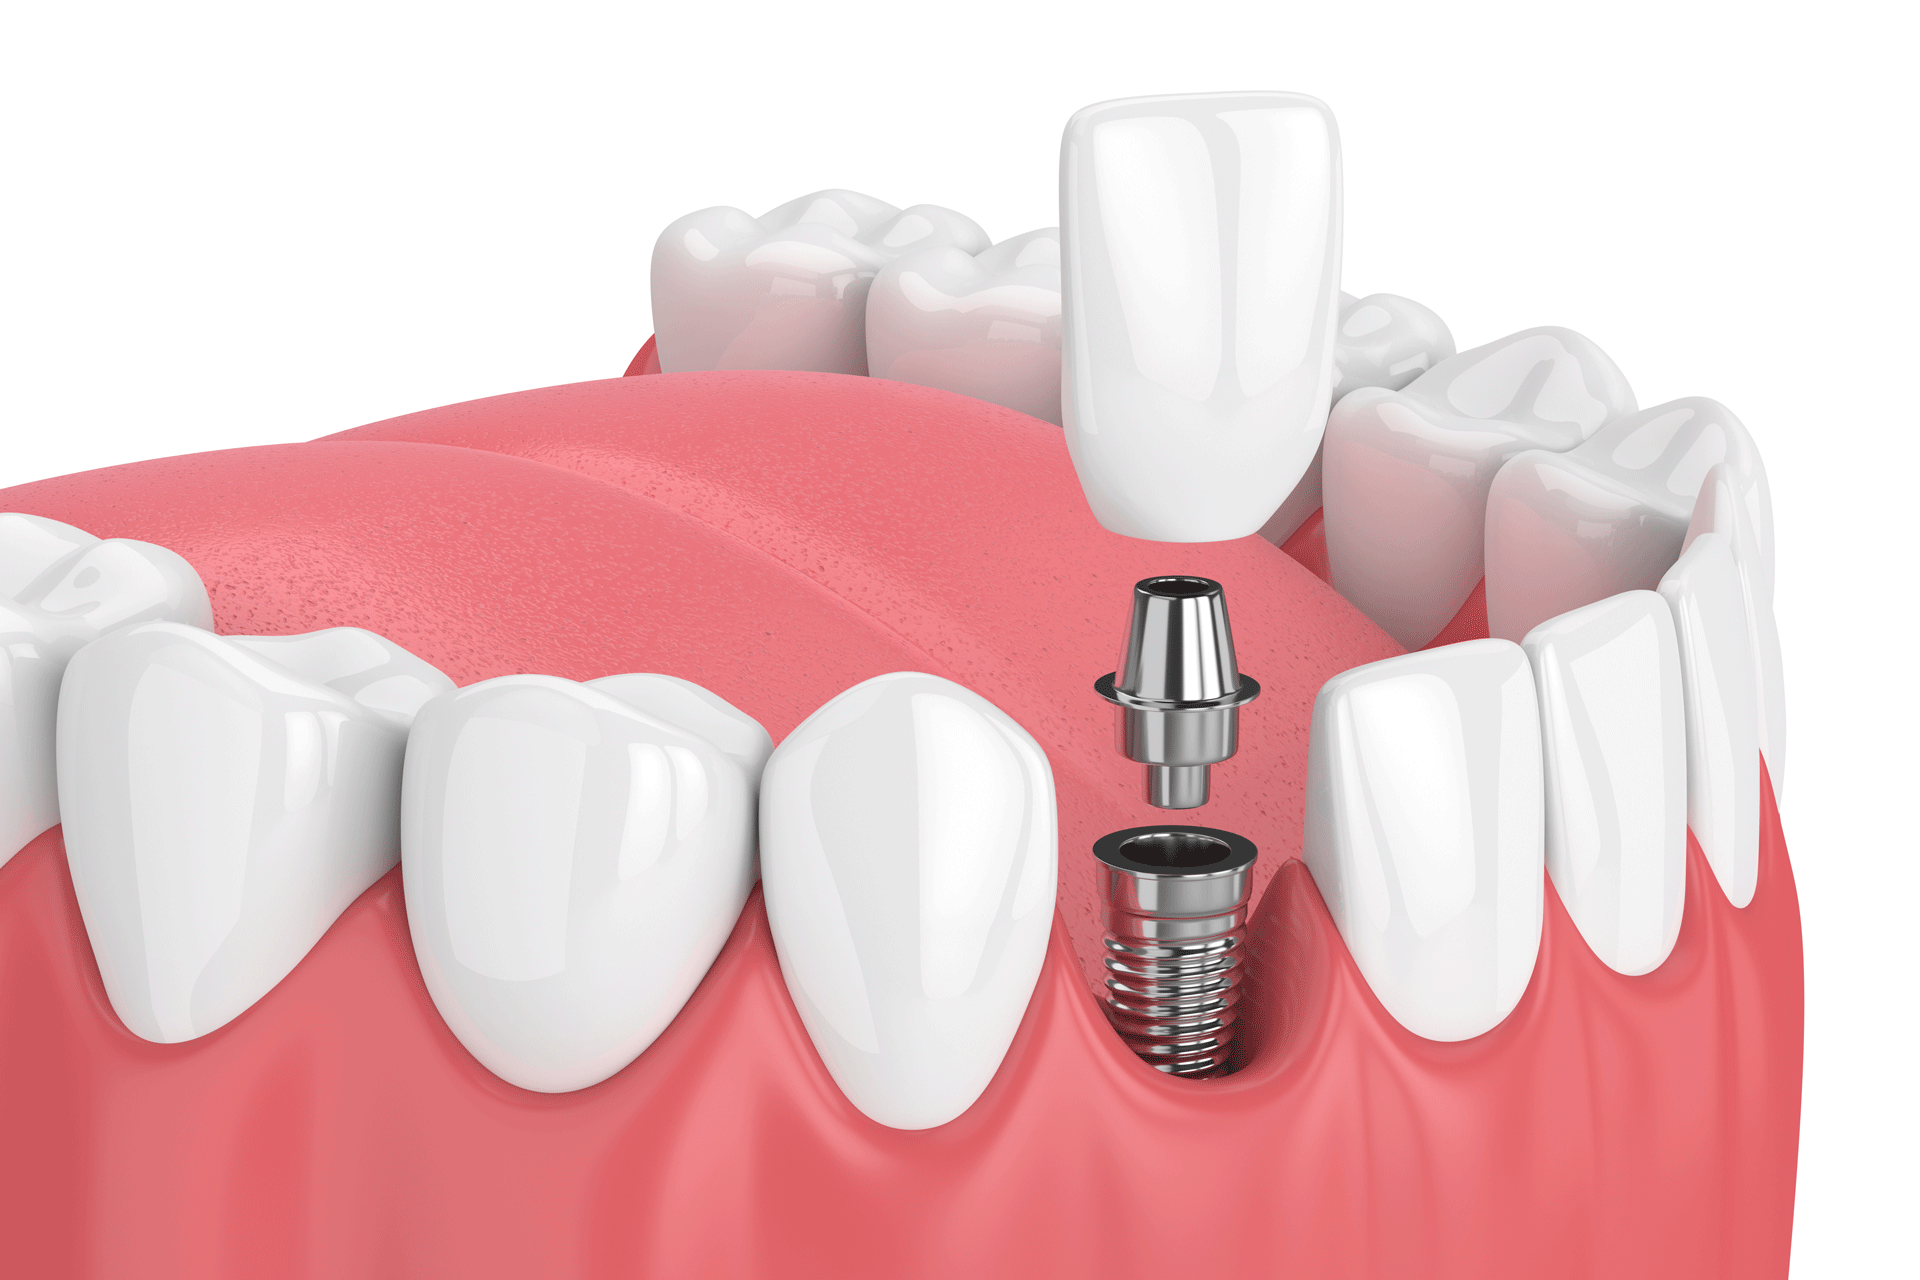 dental implant services cosmetic dentistry phoenix glendale dentsit